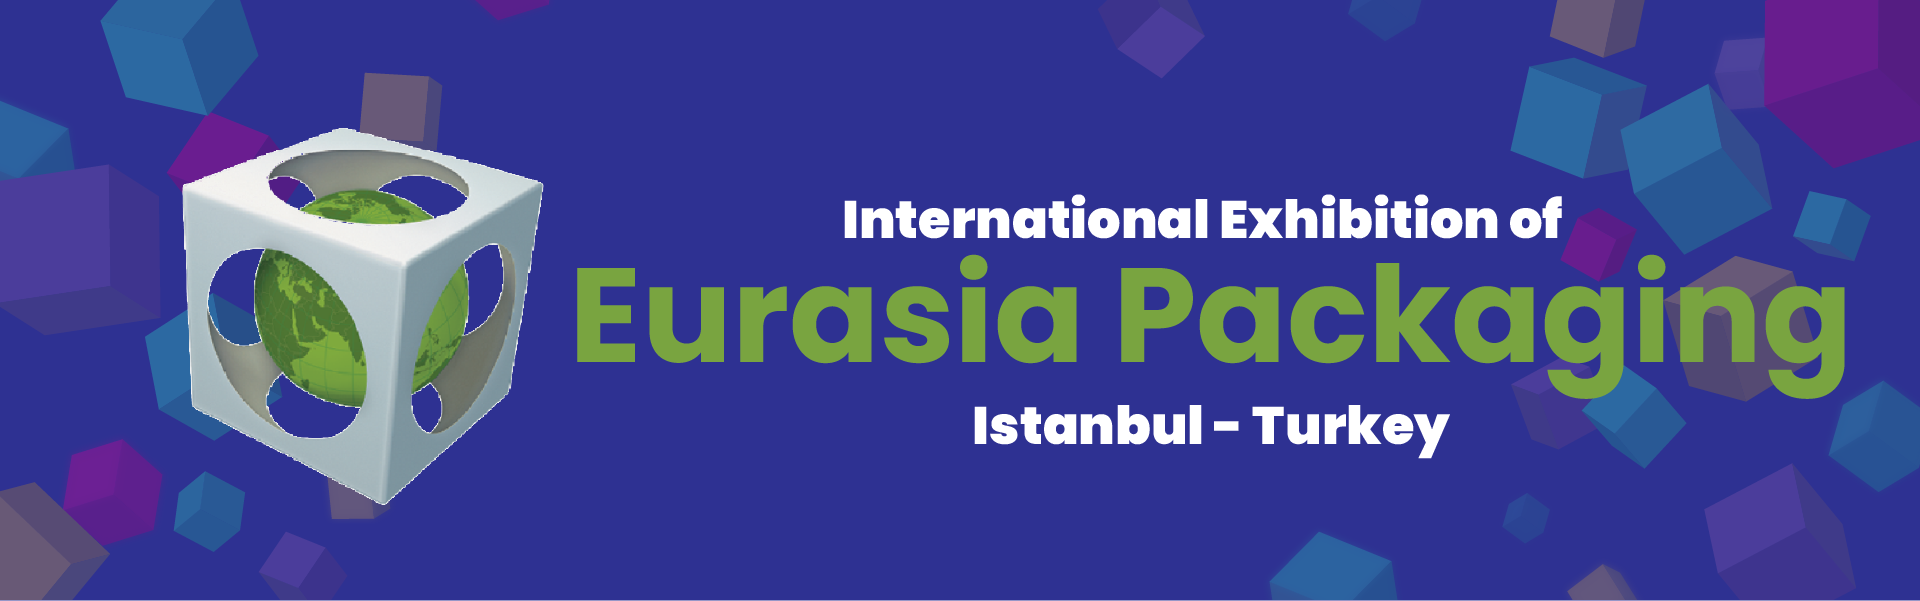 Eurasia Packaging Exhibition Istanbul Turkey